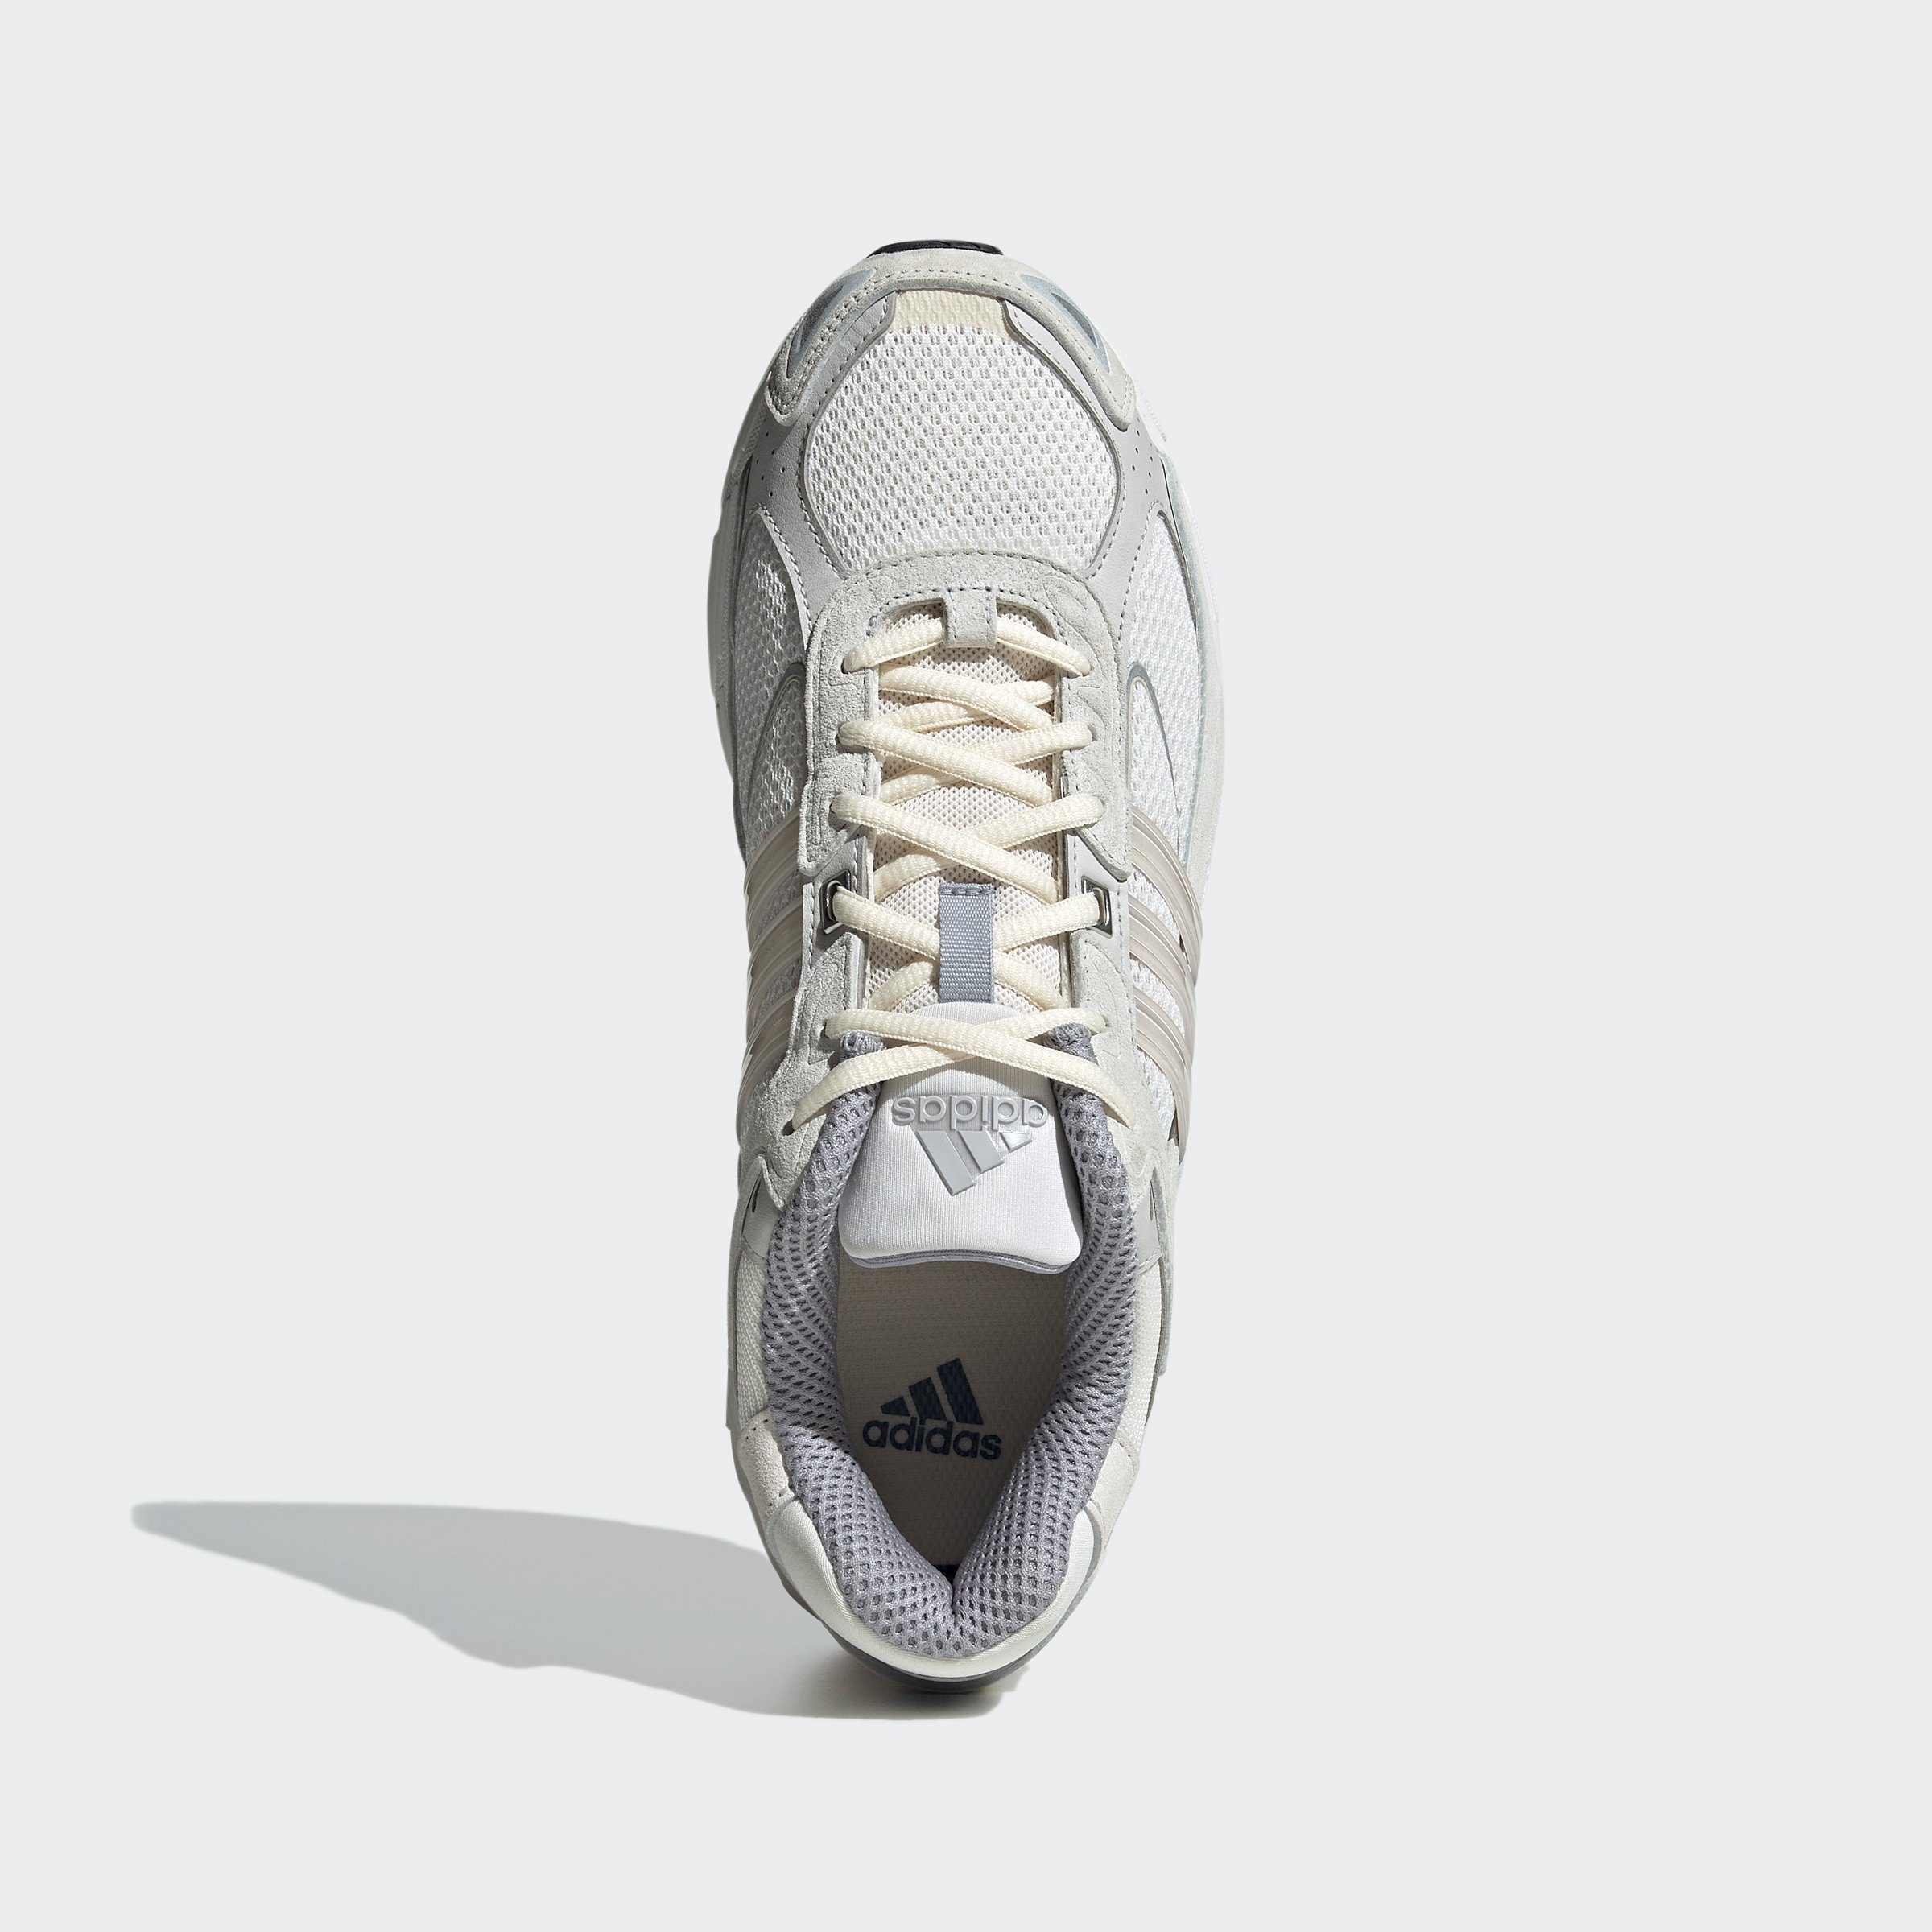 Originals adidas Crystal White Wonder CL White / Crystal / Sneaker RESPONSE White